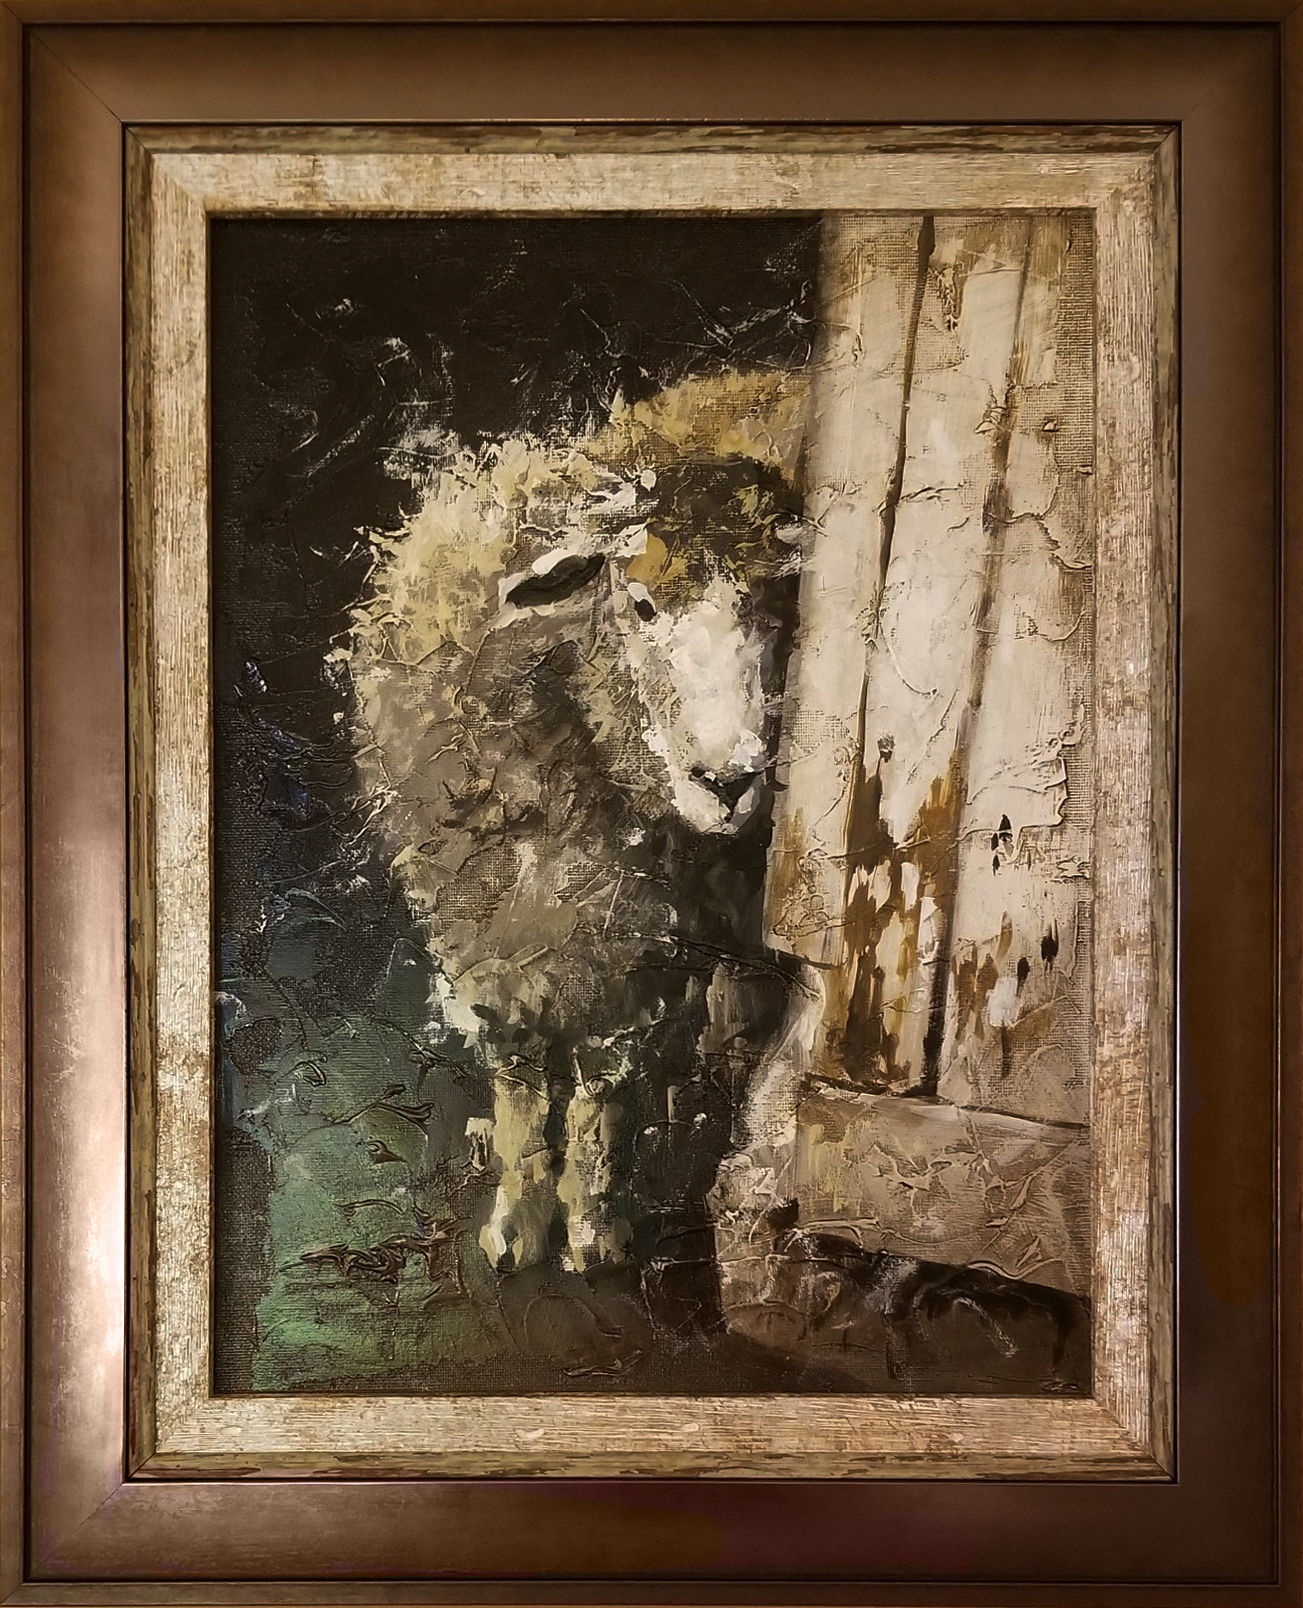 Framed piece of sheep